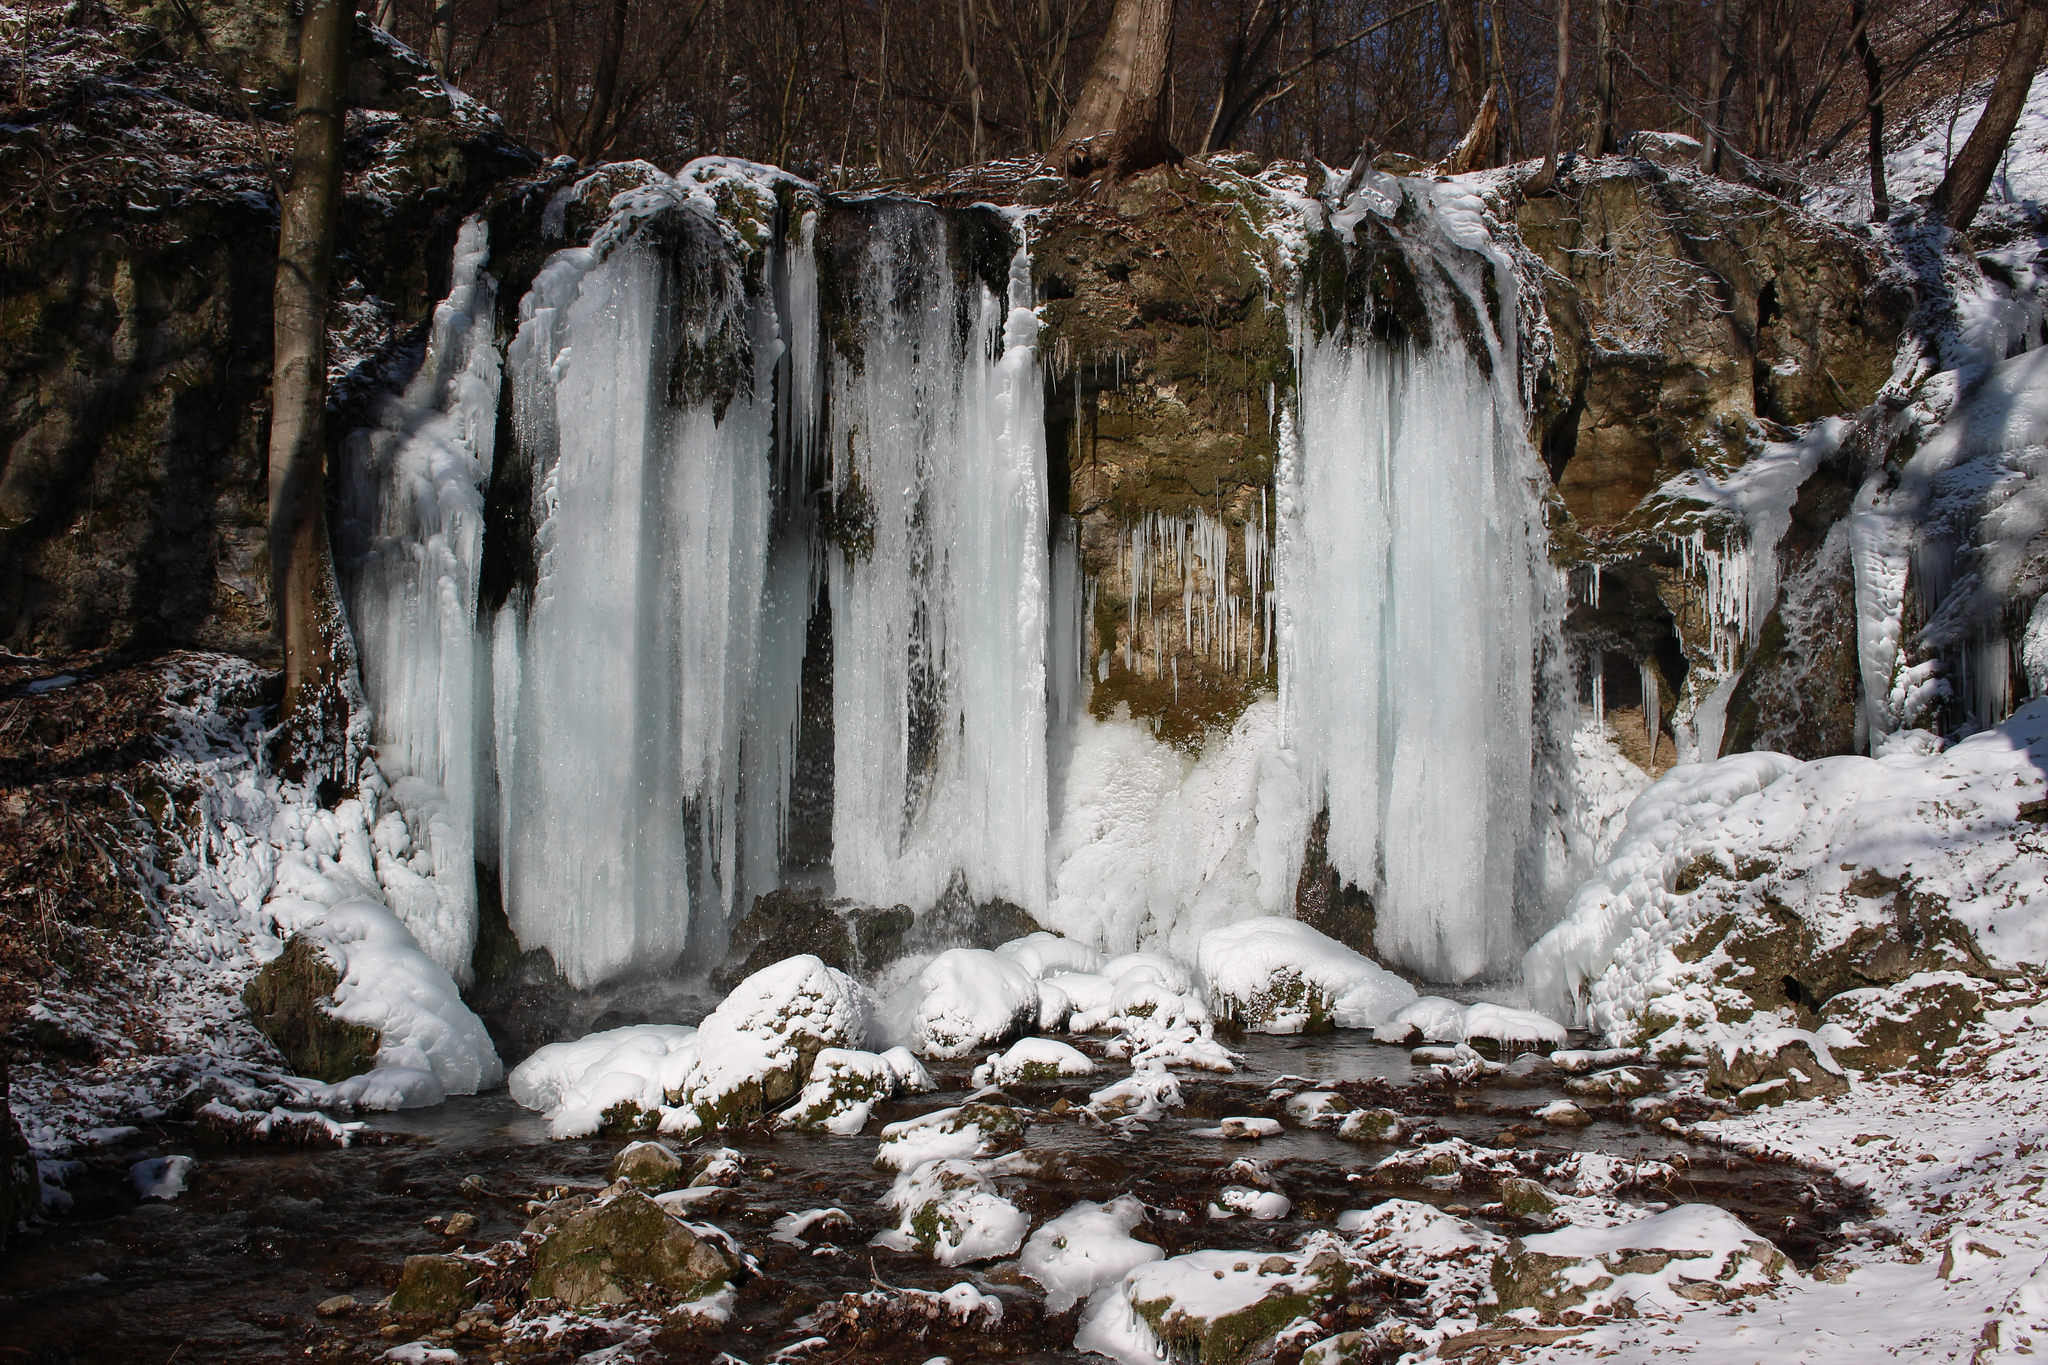 Hájske waterfalls, Slovak Karst National Park, Slovakia – 02